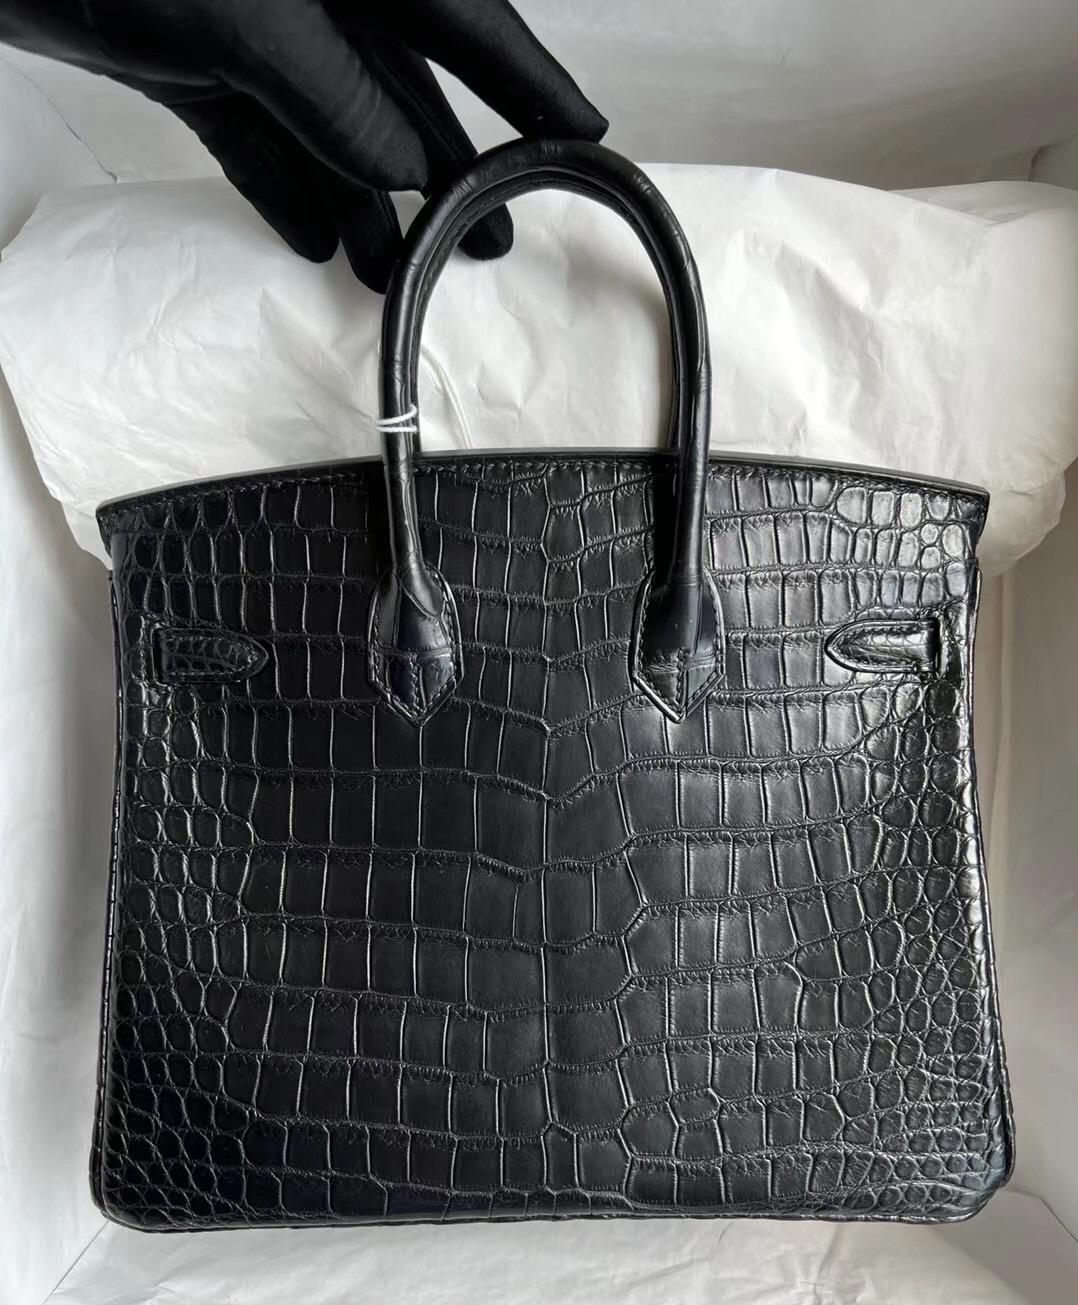 Hermès Birkin 25cm 89 黑色 Noir 霧面灣鱷 Matte Porosus Crocodile 金扣